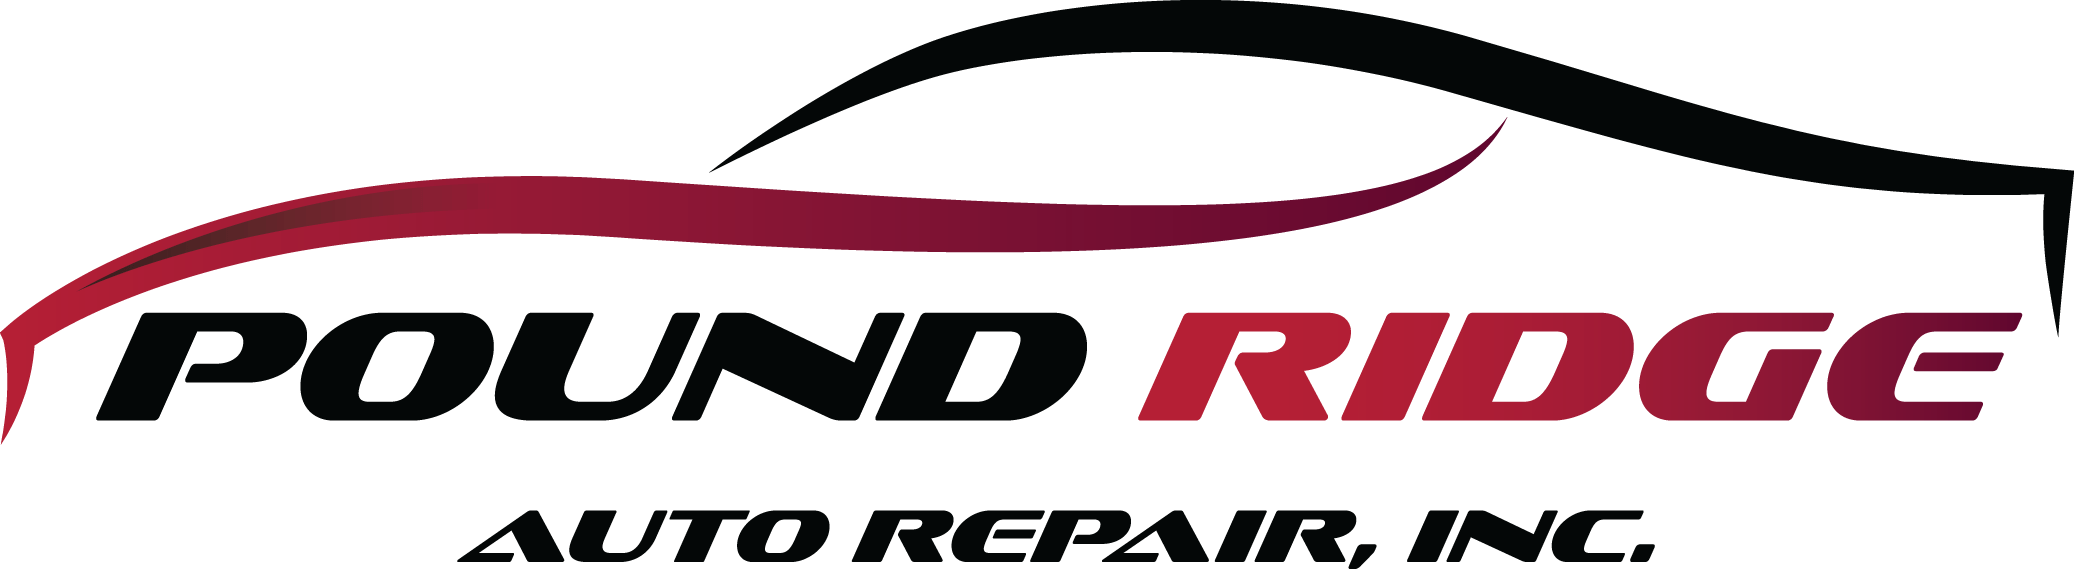 Automotive Repair Logo - Logos